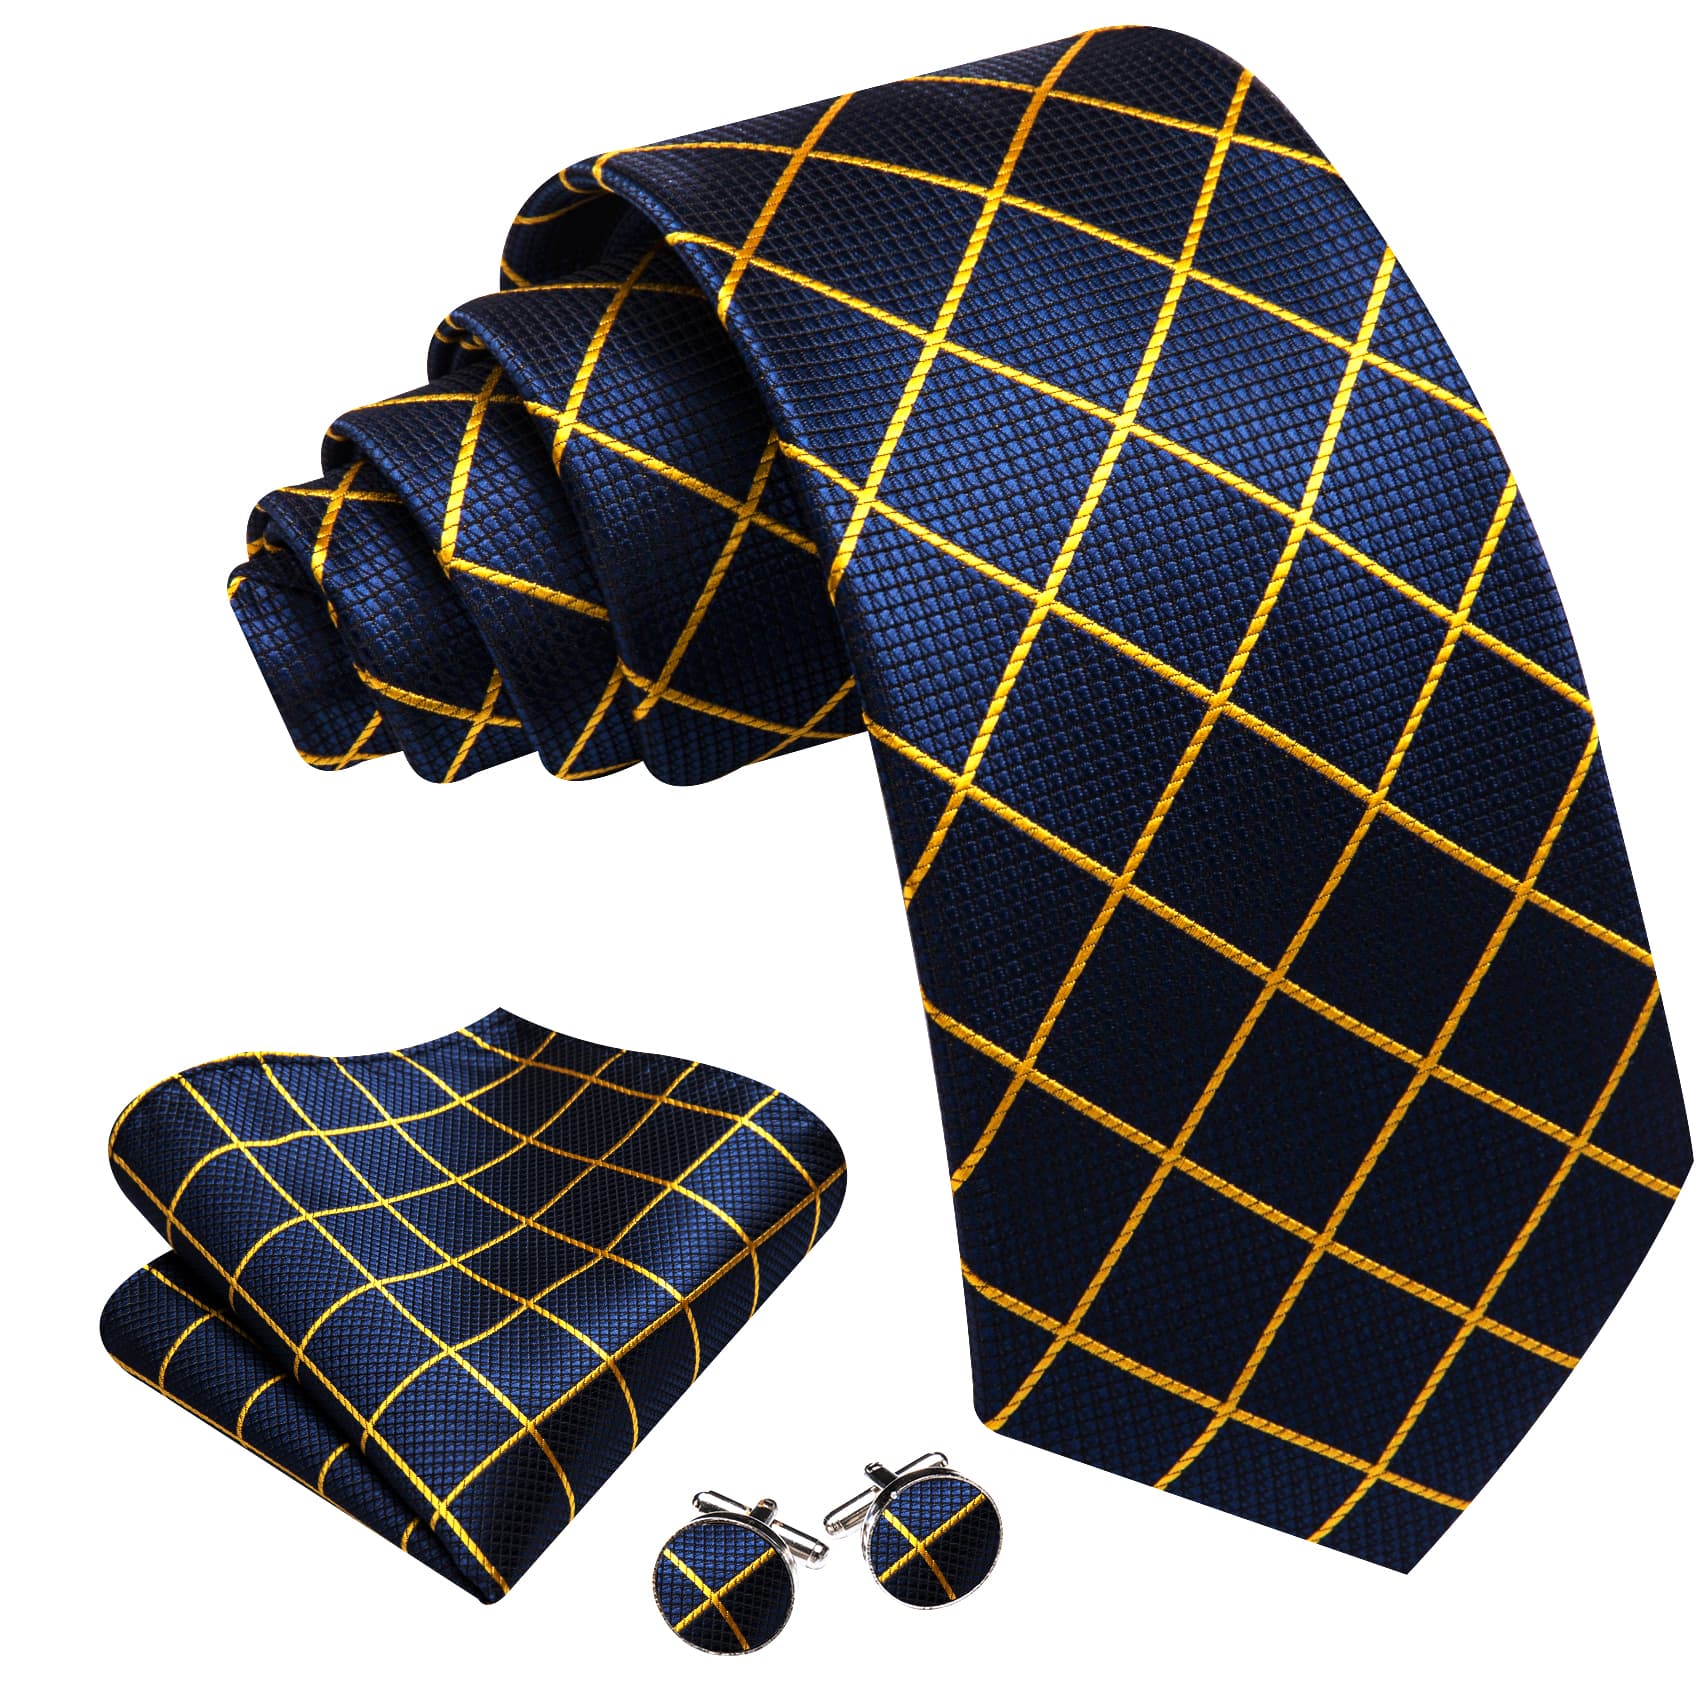  Tie Royal Blue Yelow Lines Necktie Hanky Cufflinks Set